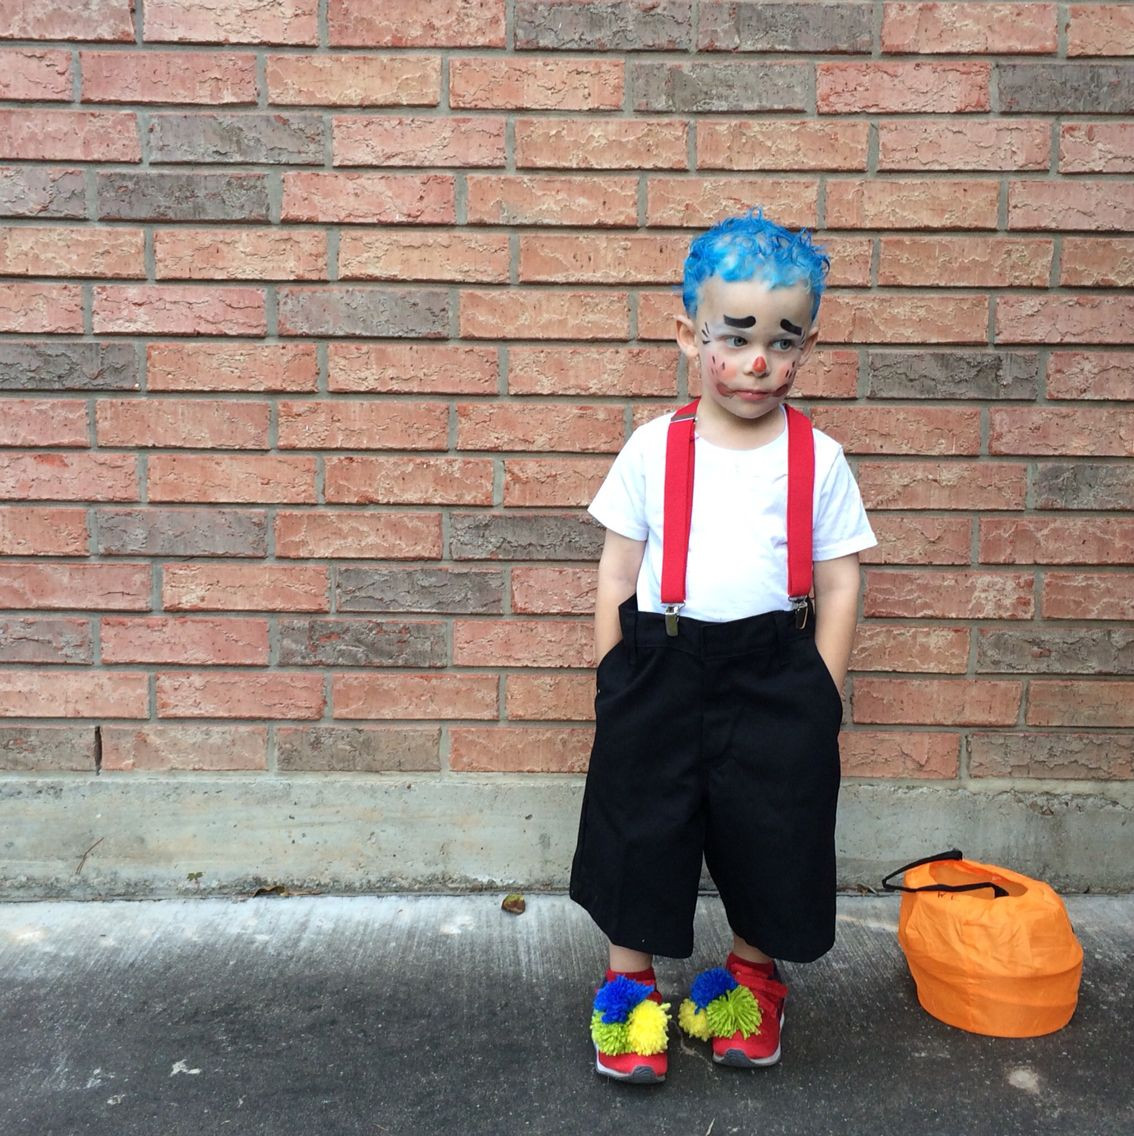 Best ideas about DIY Boys Halloween Costume
. Save or Pin DIY Kids Boy Clown Halloween Costume Yarn Pom poms Now.